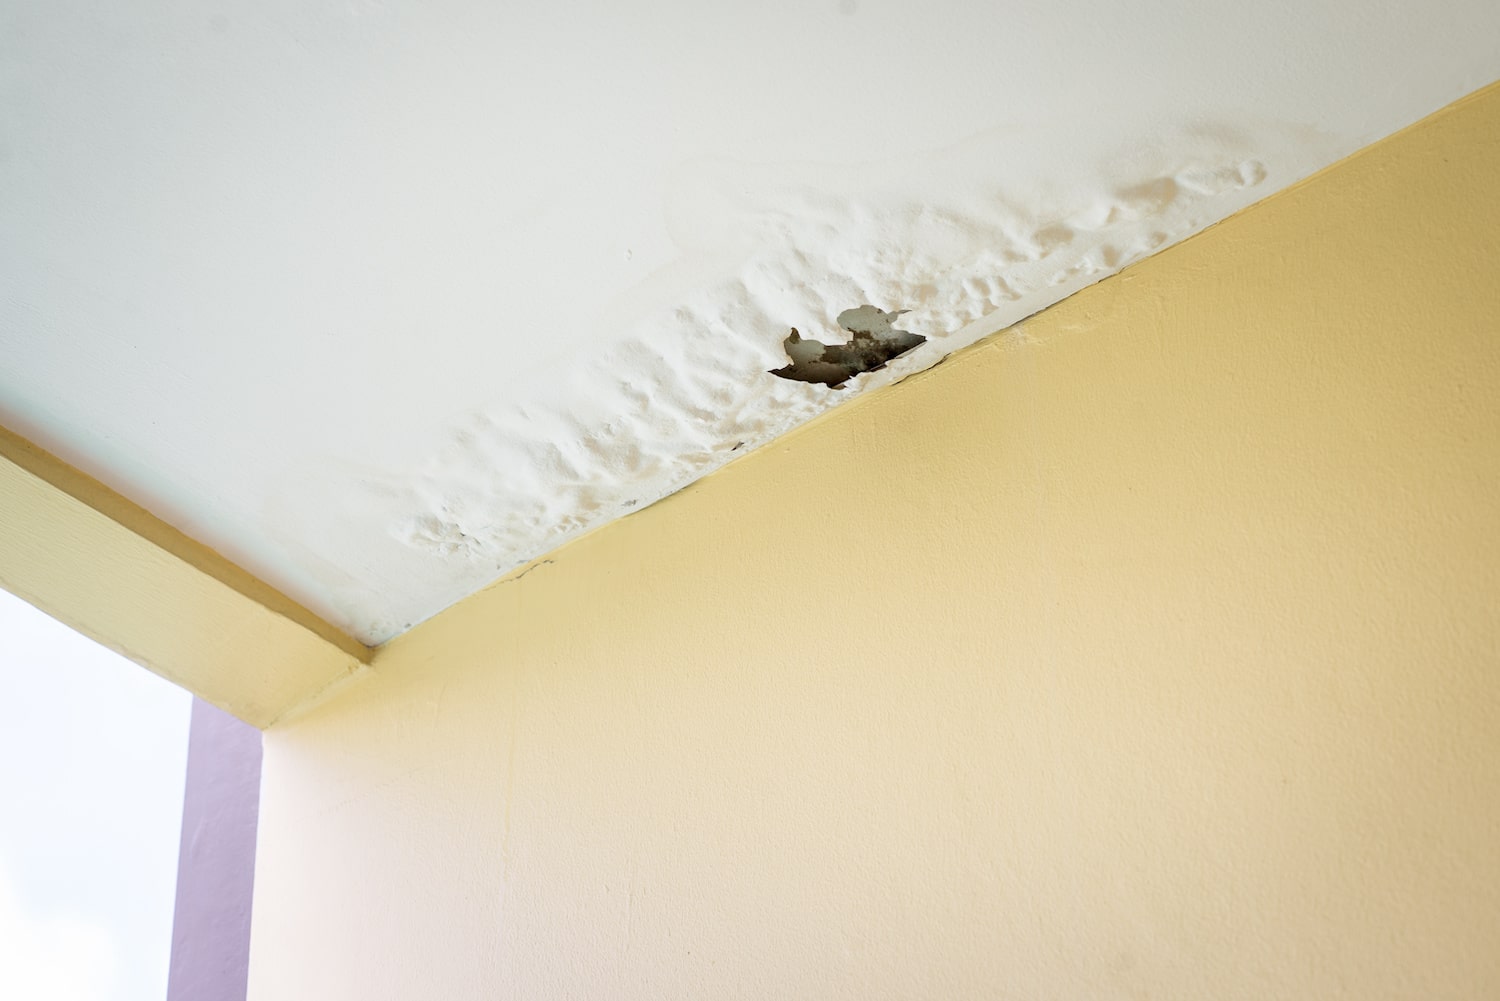 storm damage insurance claim ceiling